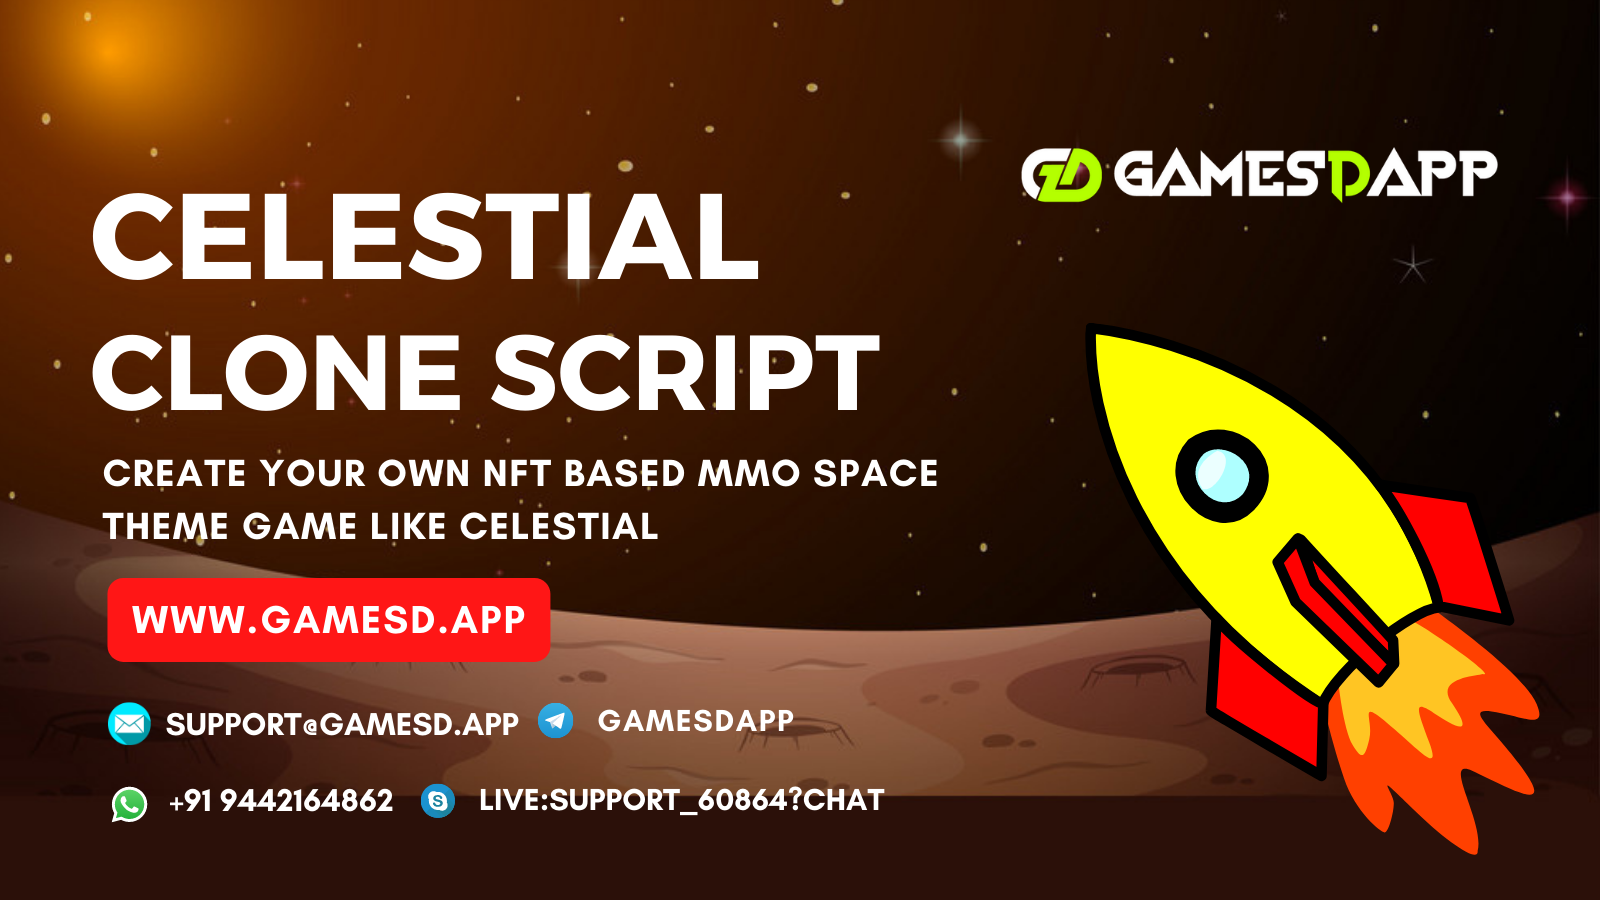 Celestial Clone Script To Create Decentralized Powered NFT Game Marketplace Like Celestial